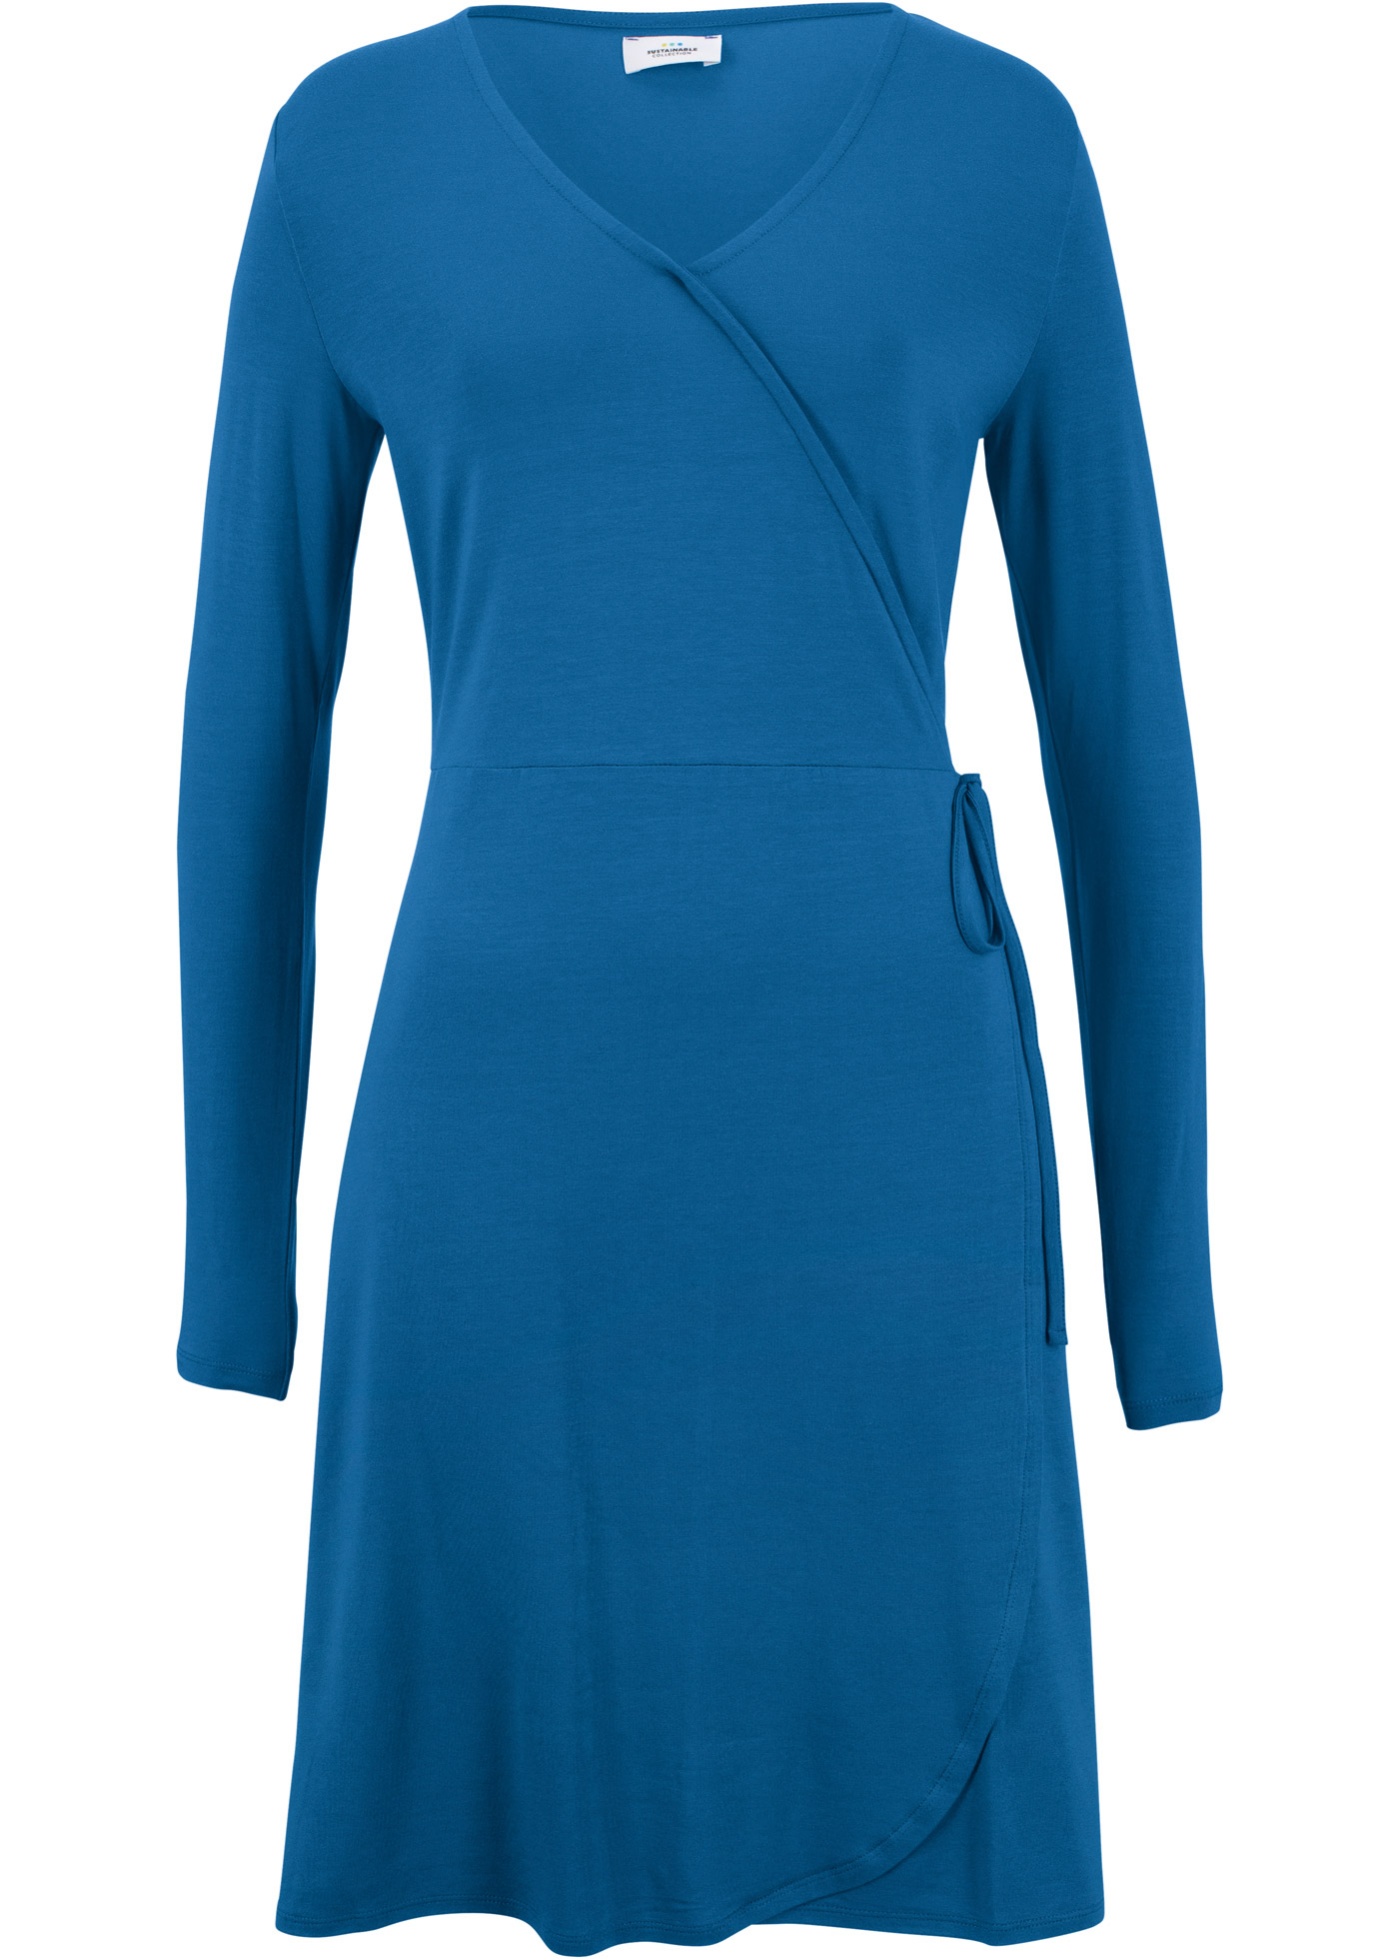 Duurzame jurk in wikkellook, TENCEL™ lyocell